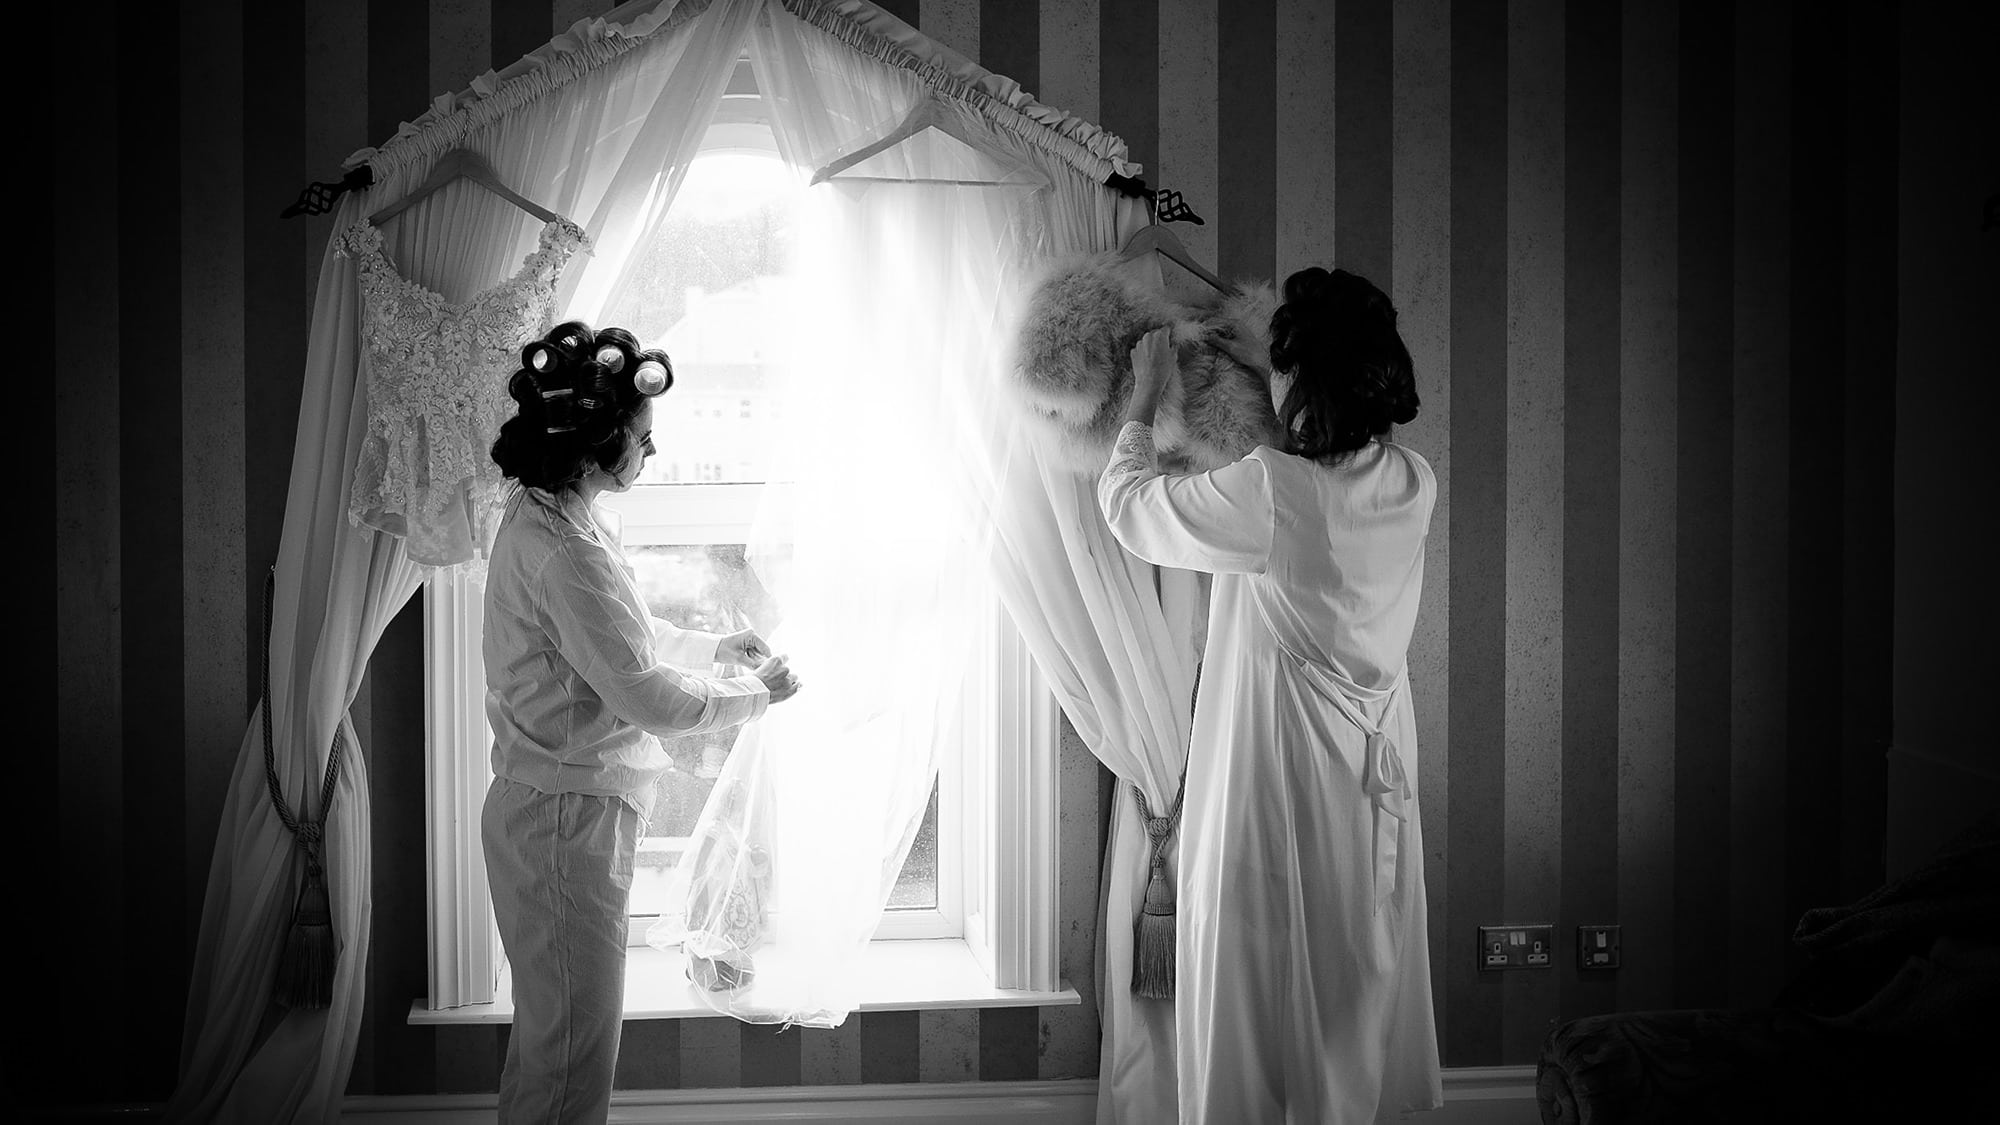 bridesmaids preparing dresses at window